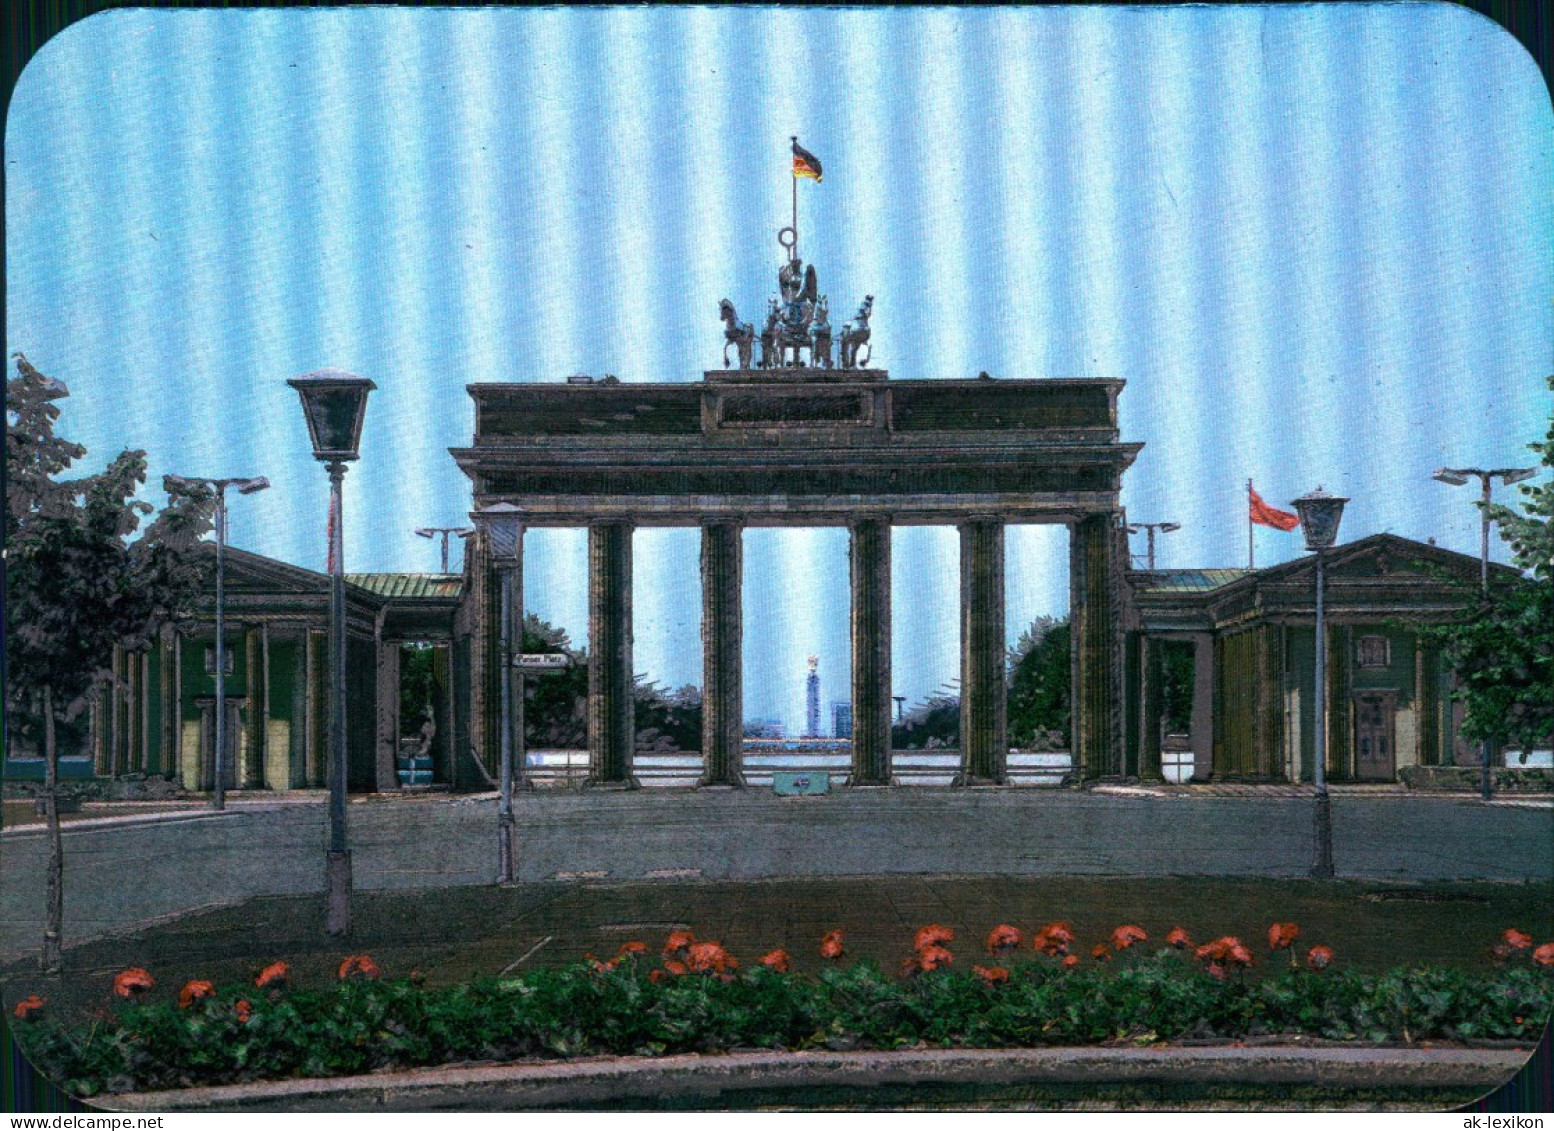 Mitte-Berlin Brandenburger Tor (Gate And The Wall) 1975 Silber-Effekt - Porte De Brandebourg